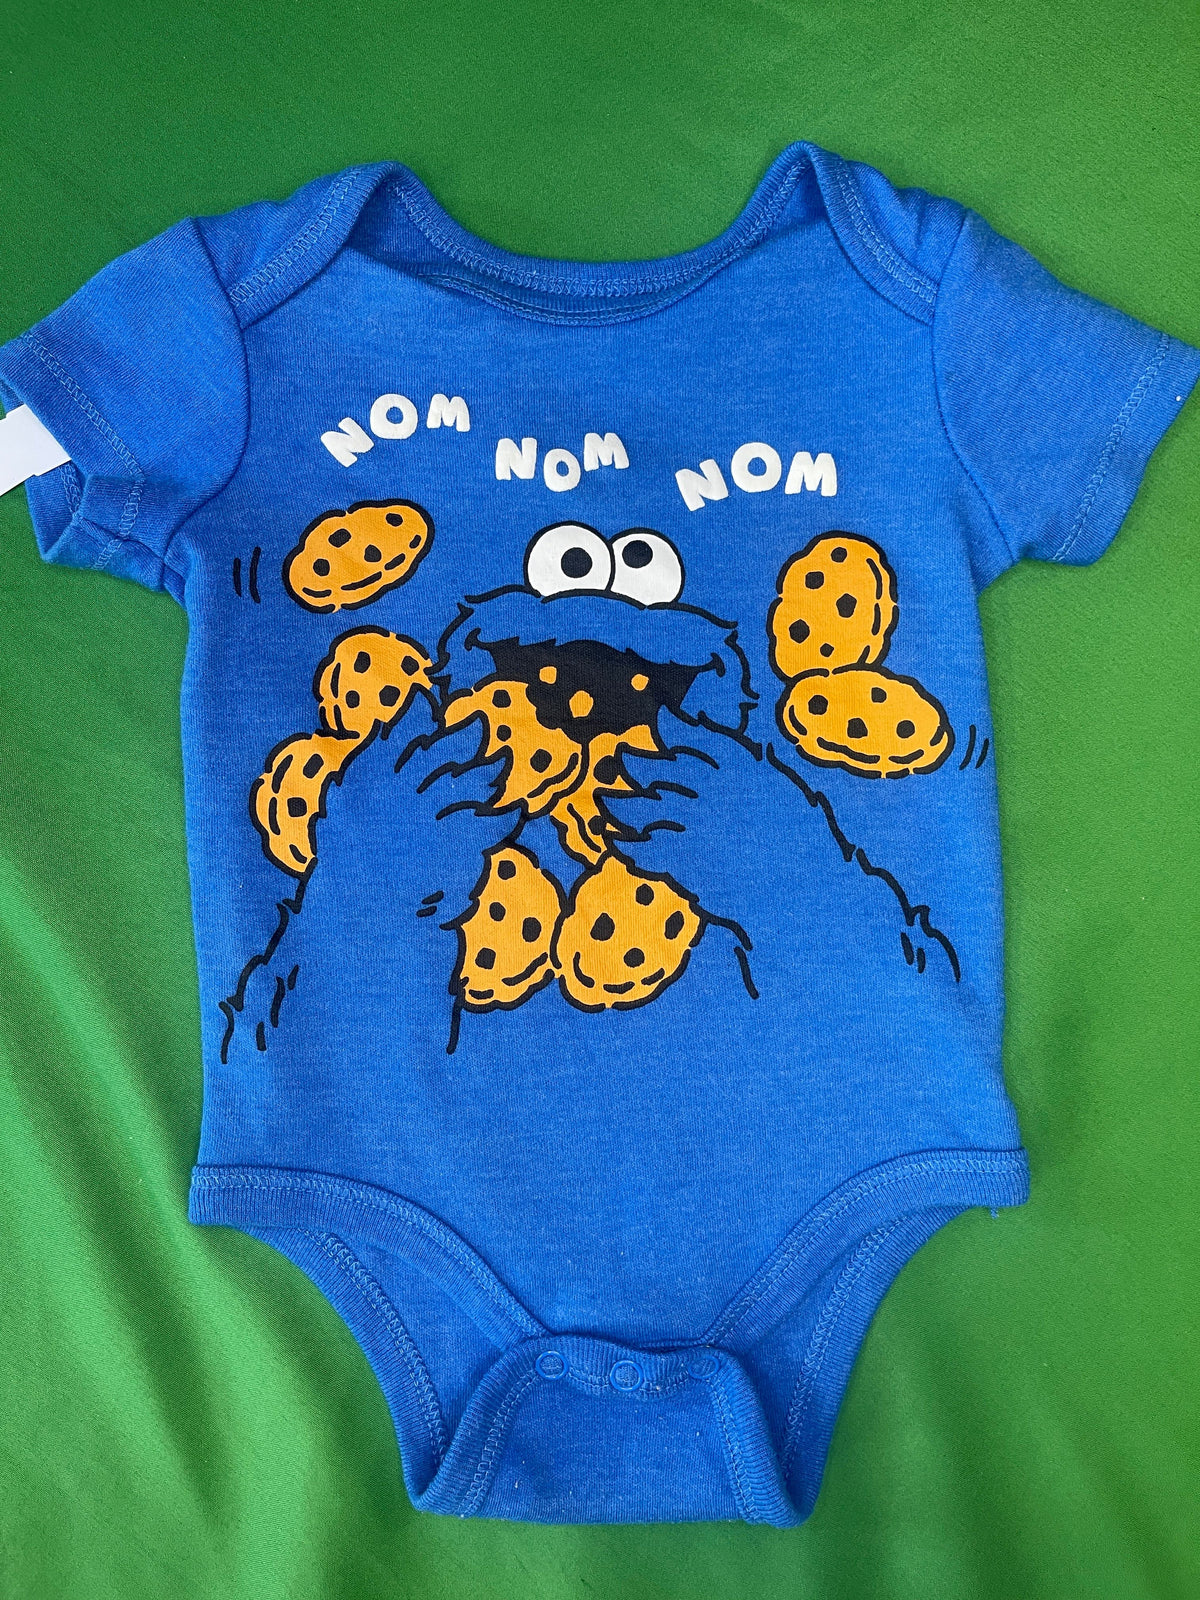 Sesame Street Cookie Monster Nom Nom Baby Bodysuit/Vest 3-6 months